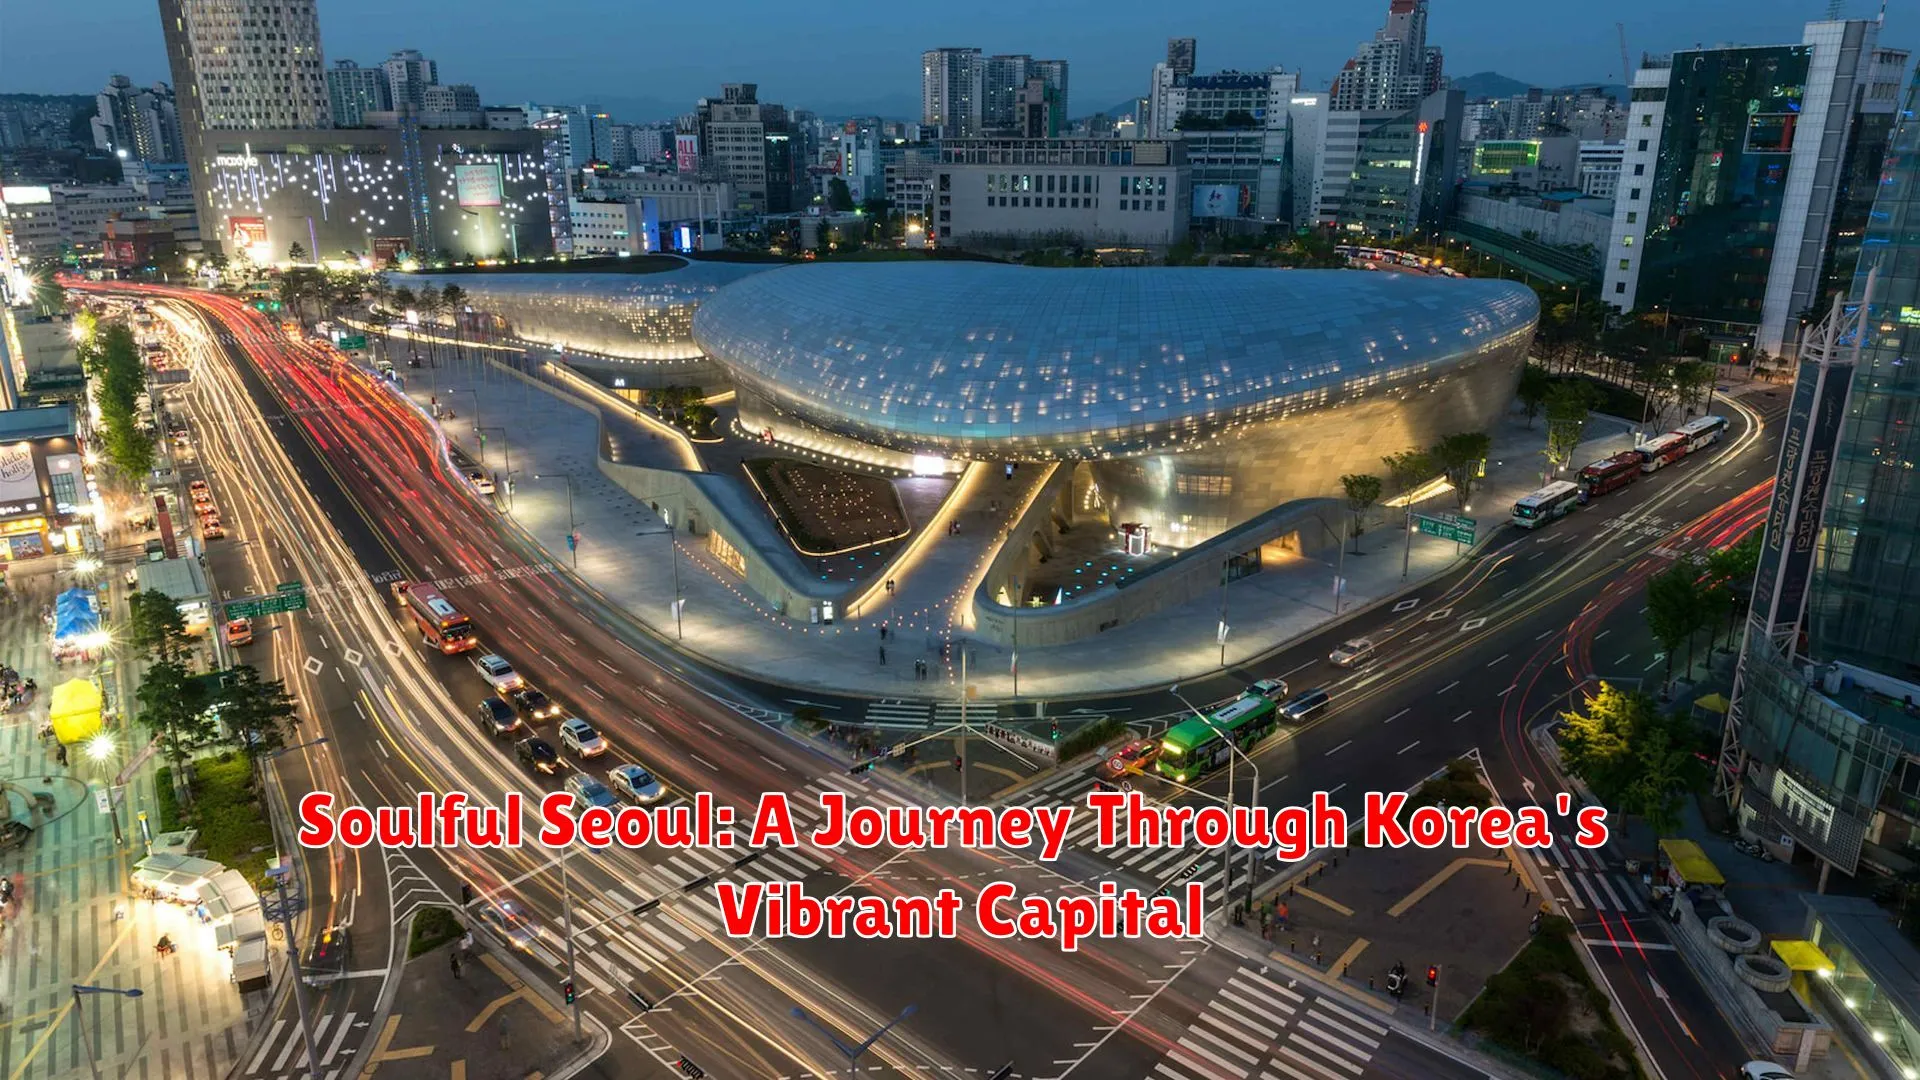 Soulful Seoul: A Journey Through Korea's Vibrant Capital